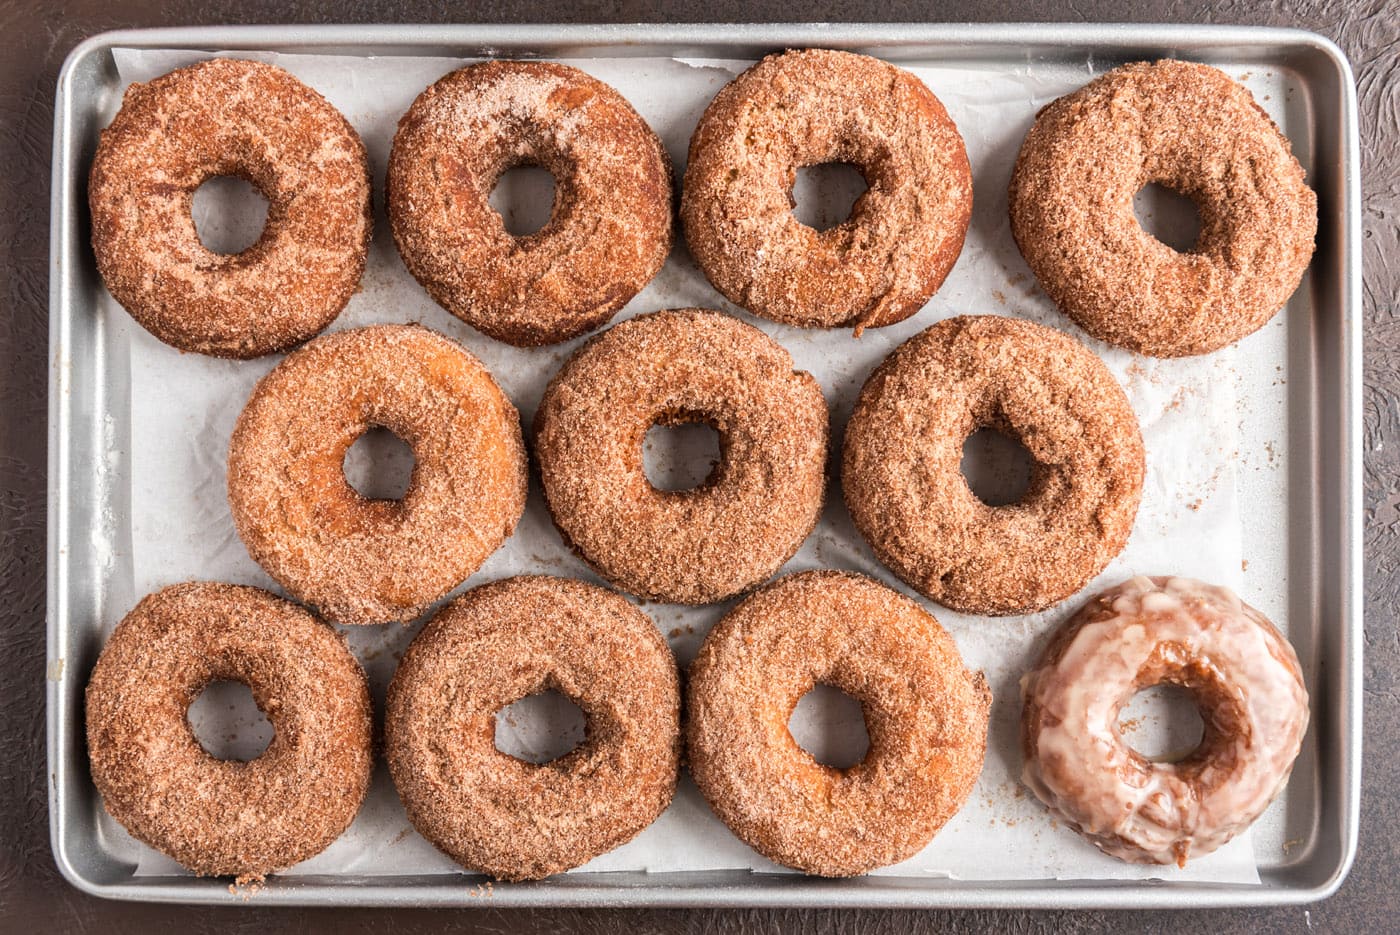 cinnamn sugar coated donuts on a baking sheet